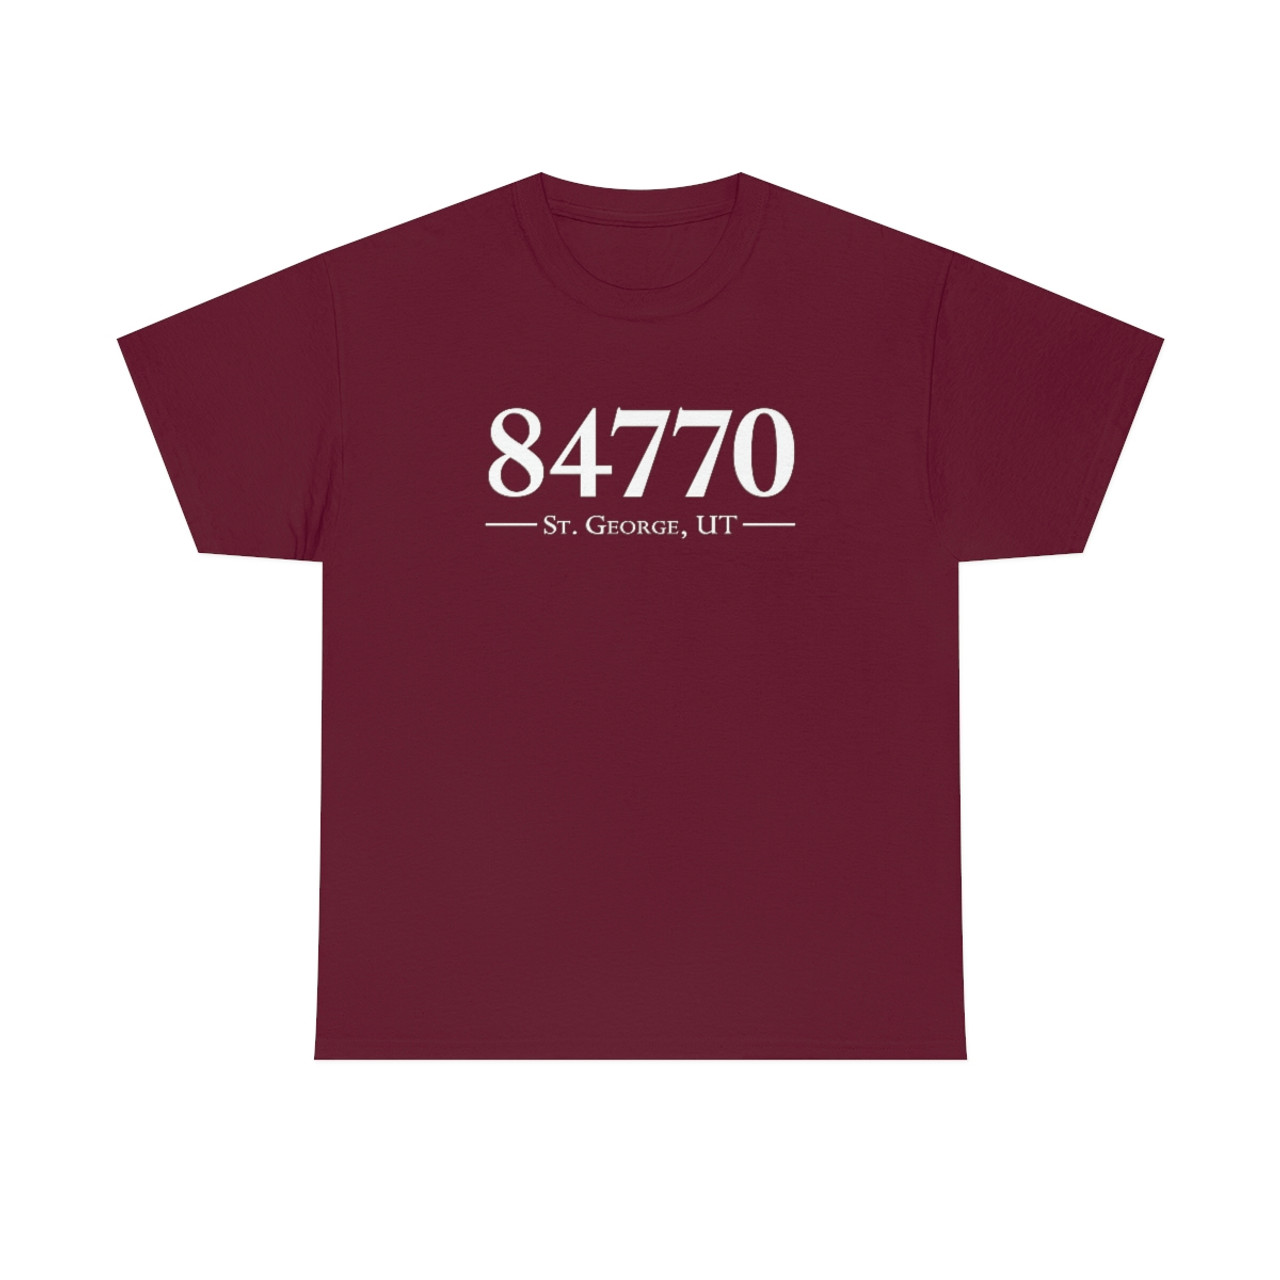 Zip Code T-Shirt St. primi UTAH - George, 84770 UT